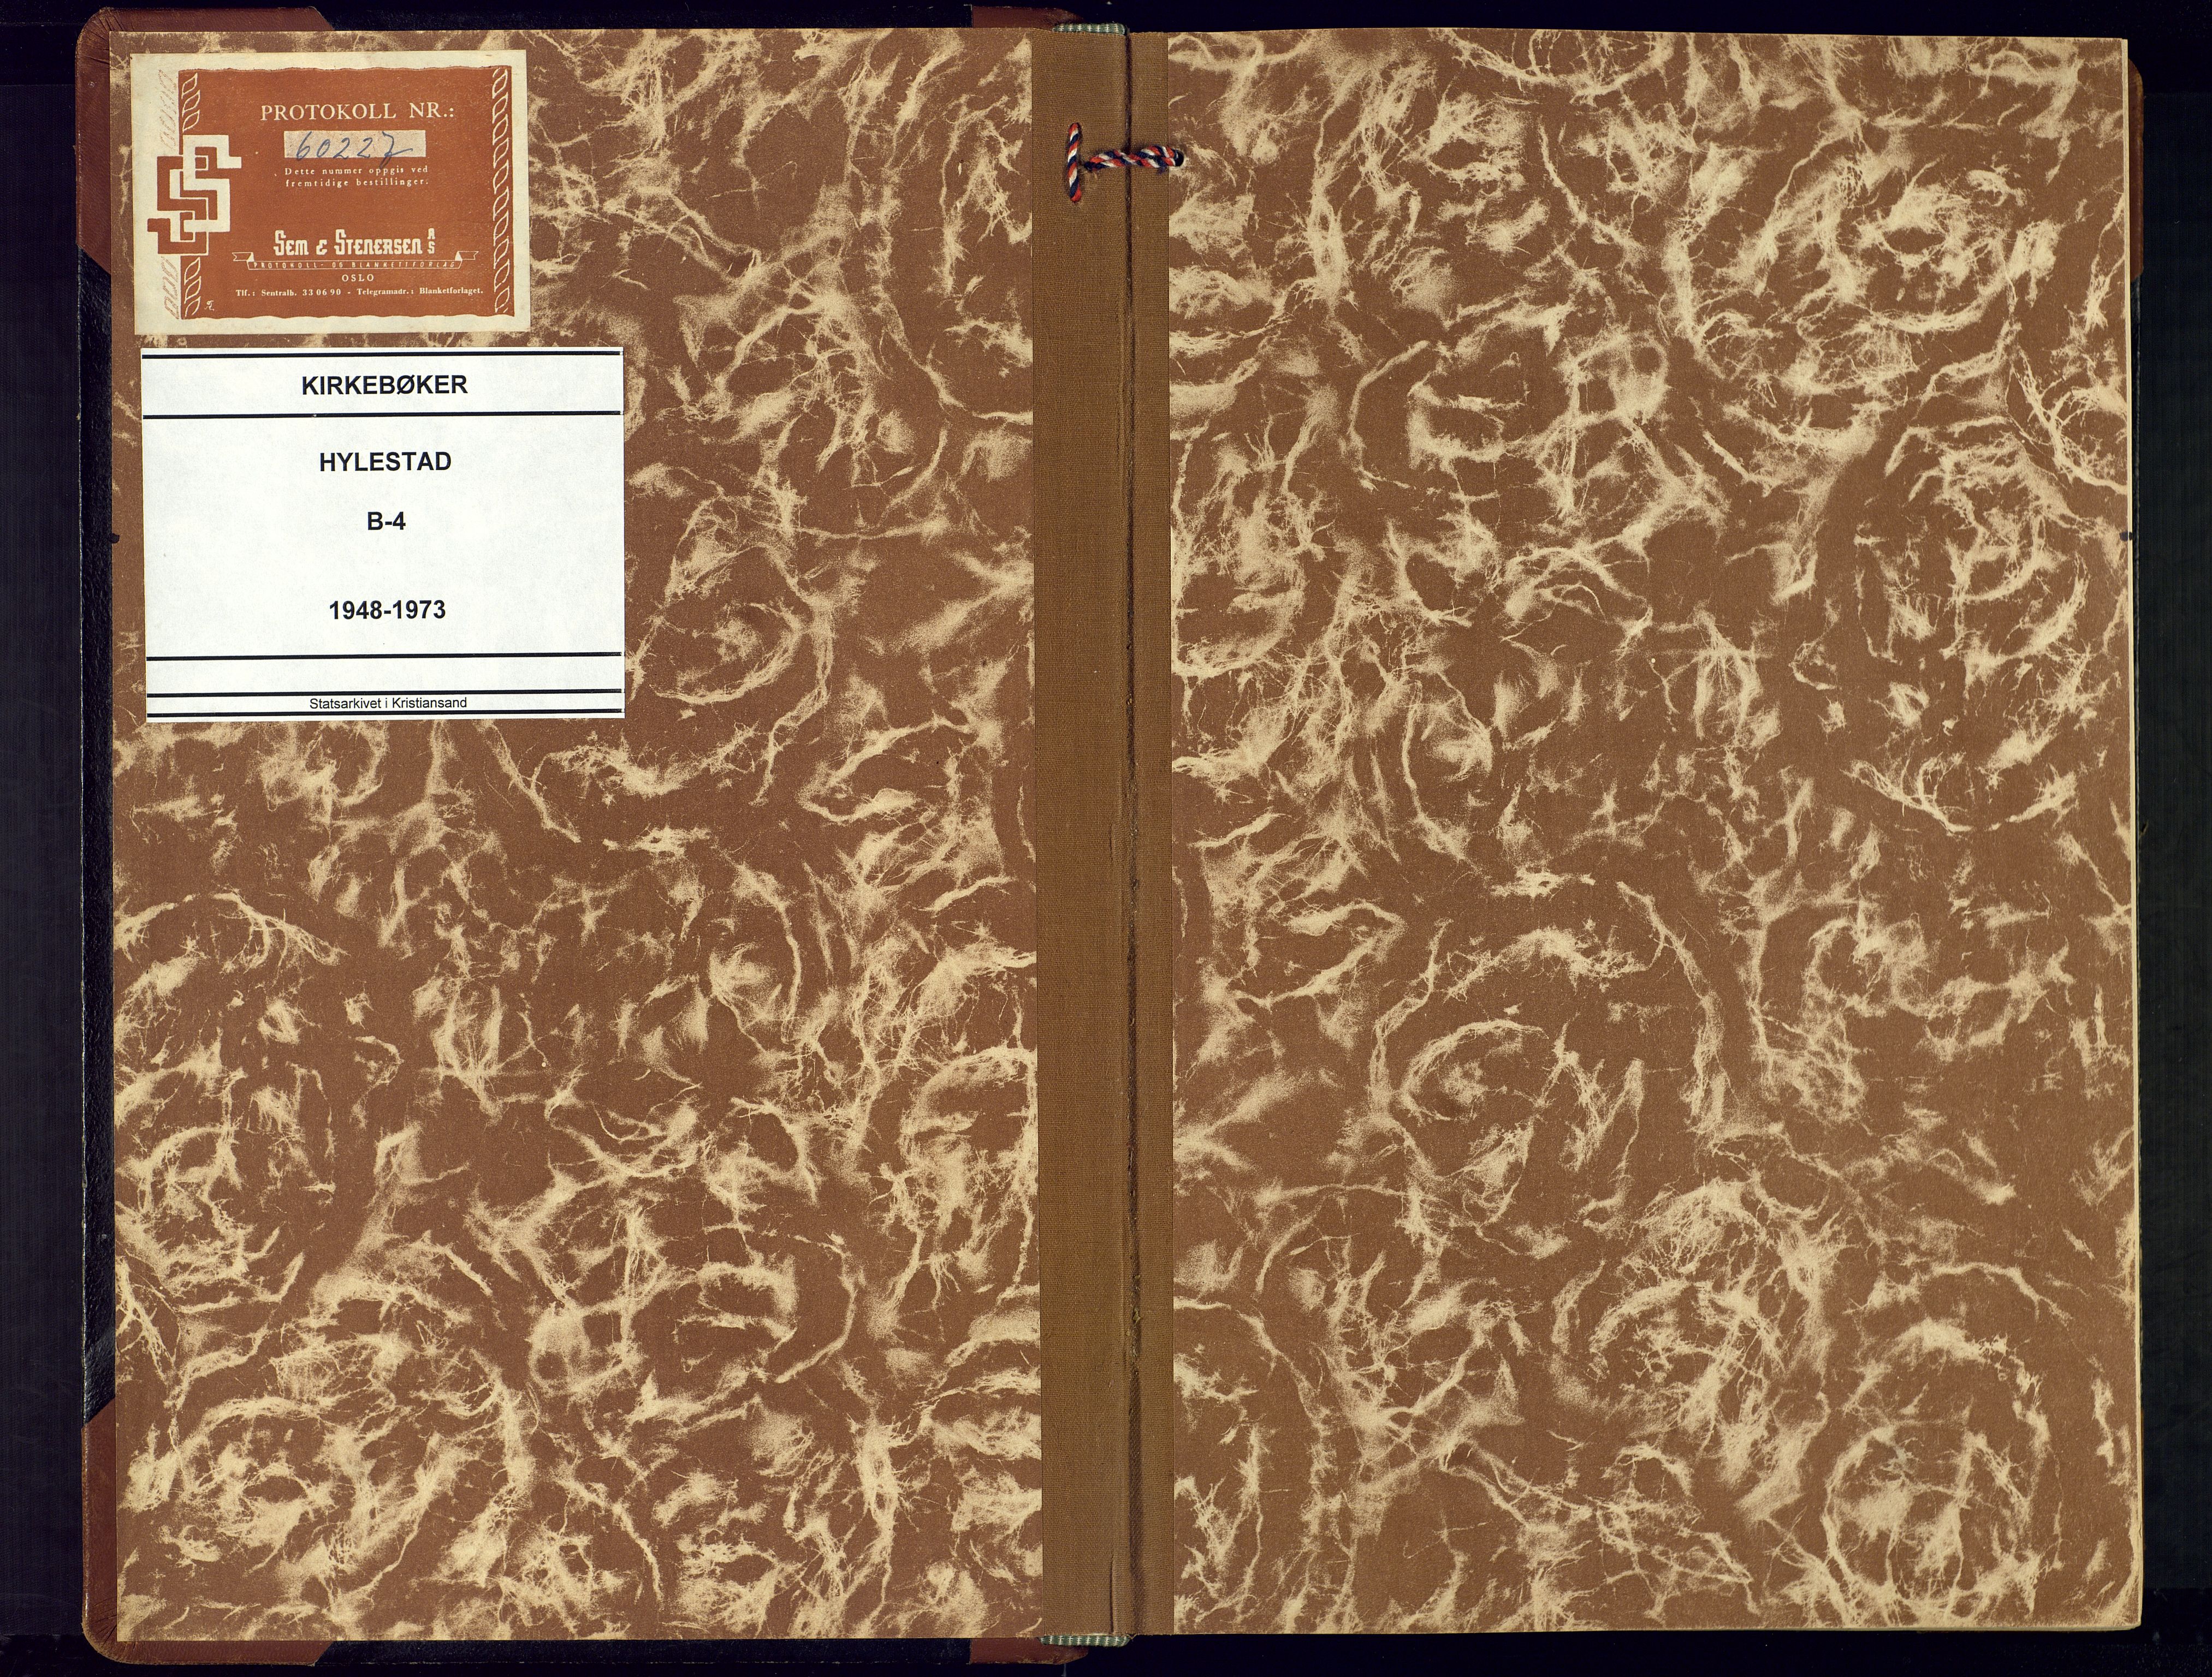 Valle sokneprestkontor, SAK/1111-0044/F/Fb/Fbb/L0004: Klokkerbok nr. B-4, 1948-1973